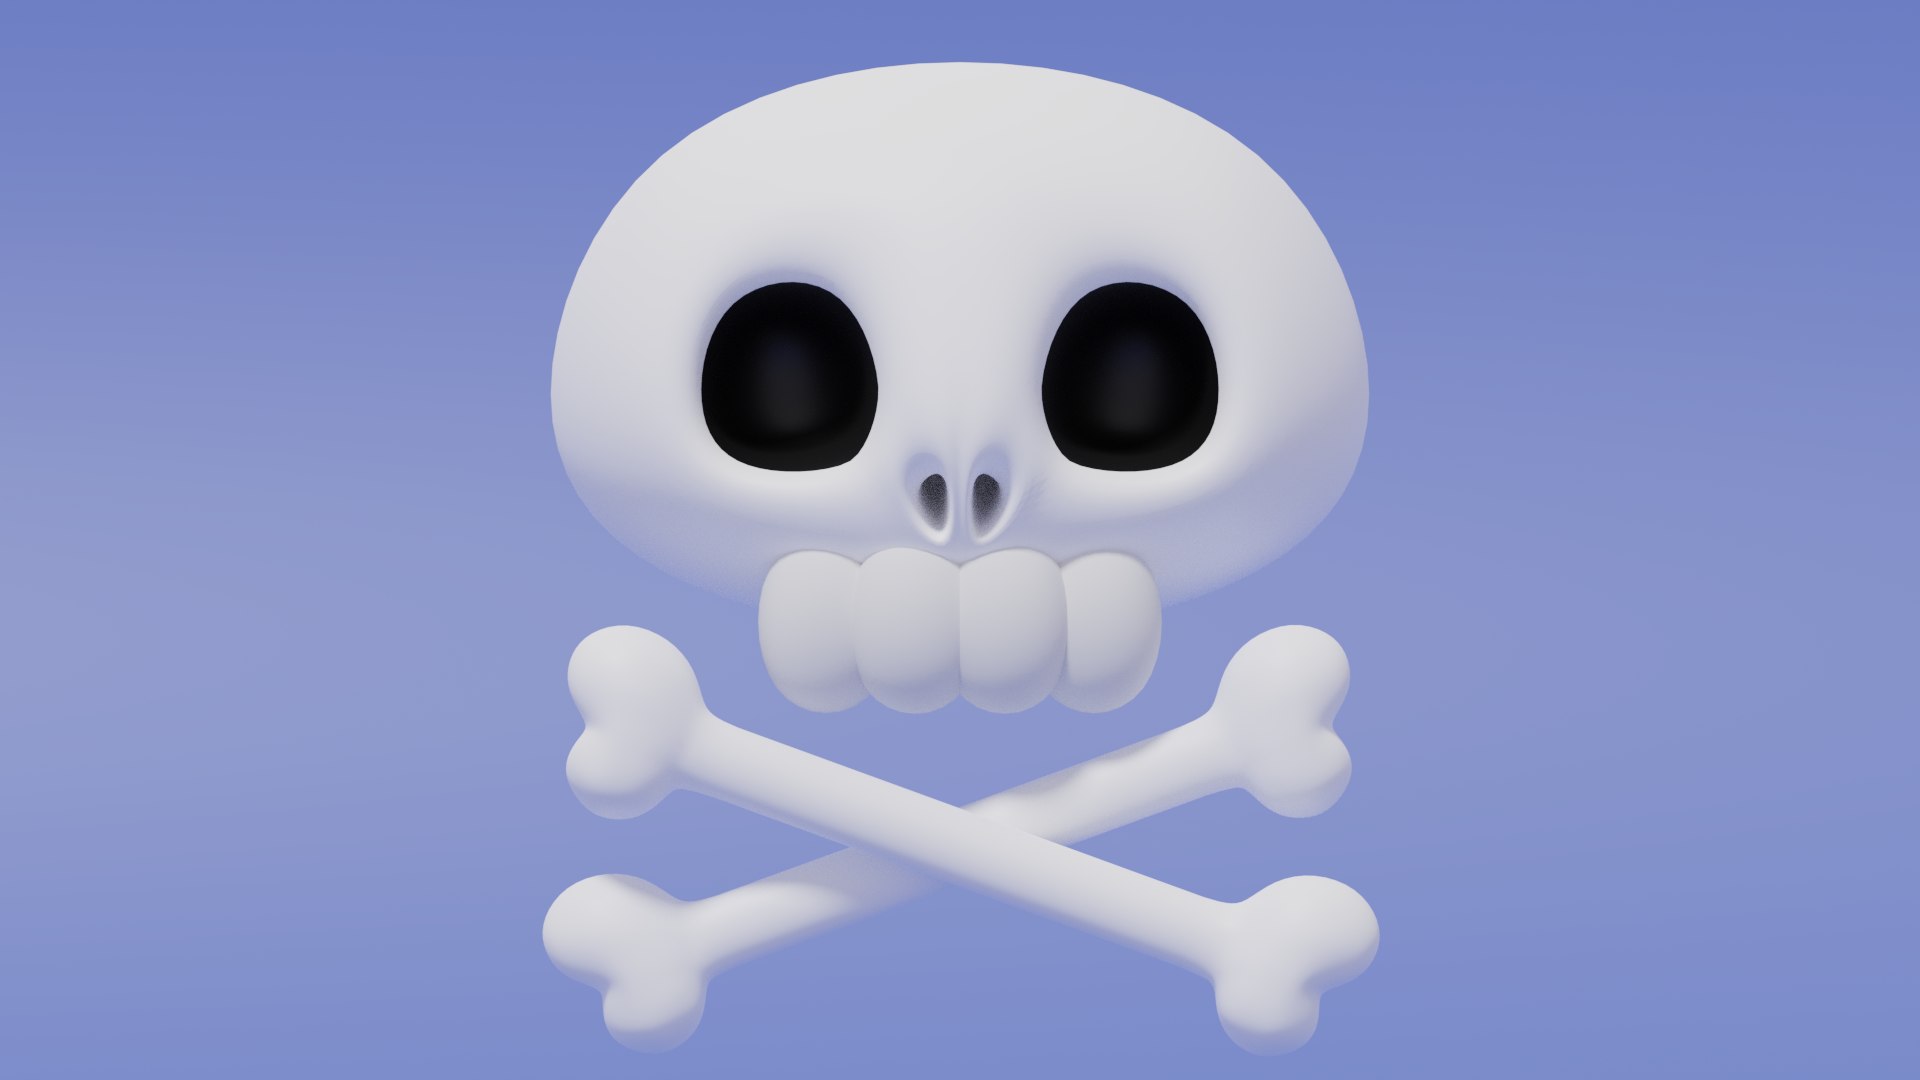 scary cartoon skull and crossbones